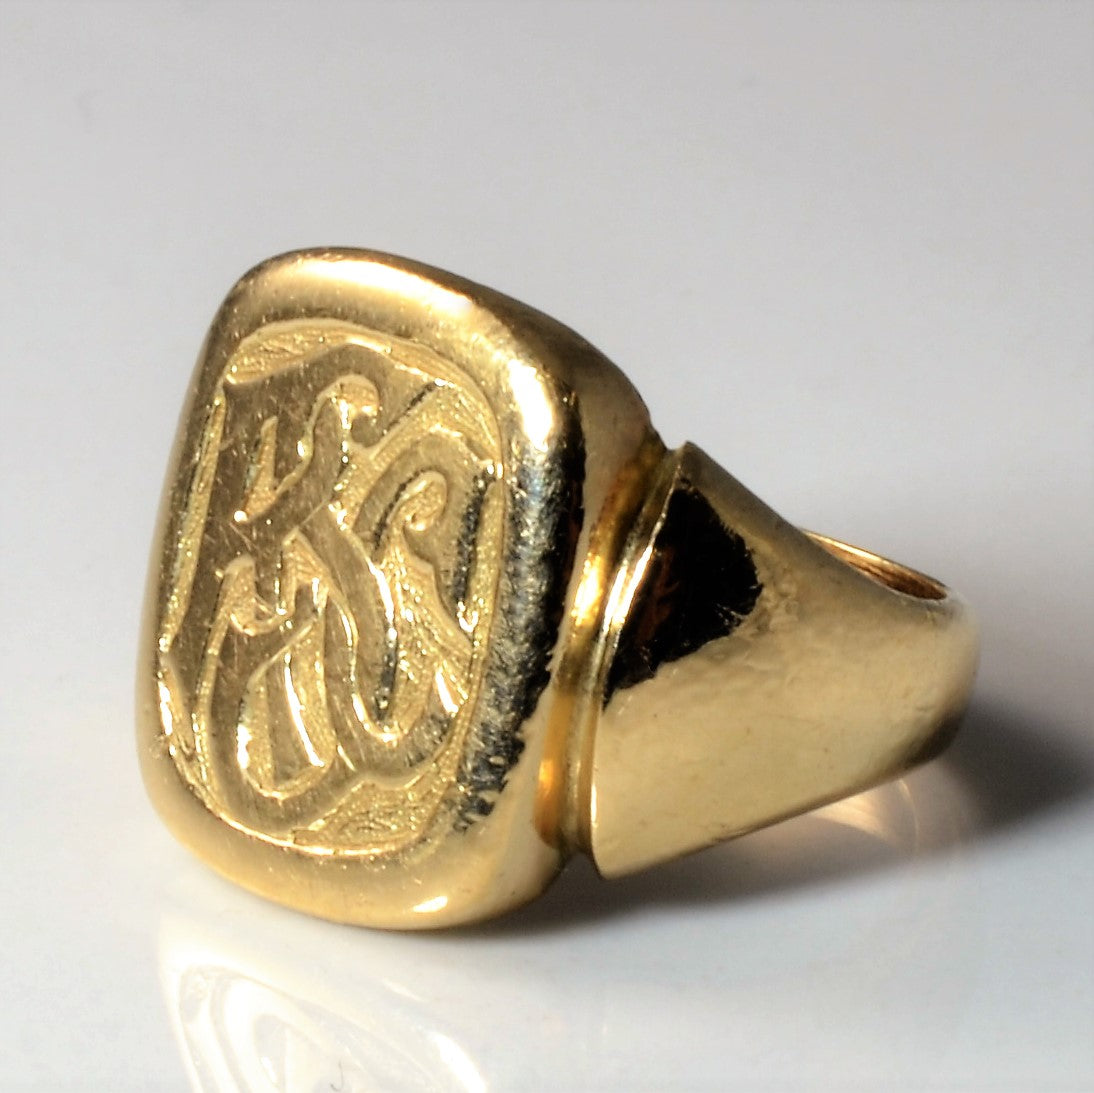 'Birks' Engraved Signet Ring | SZ 5 |